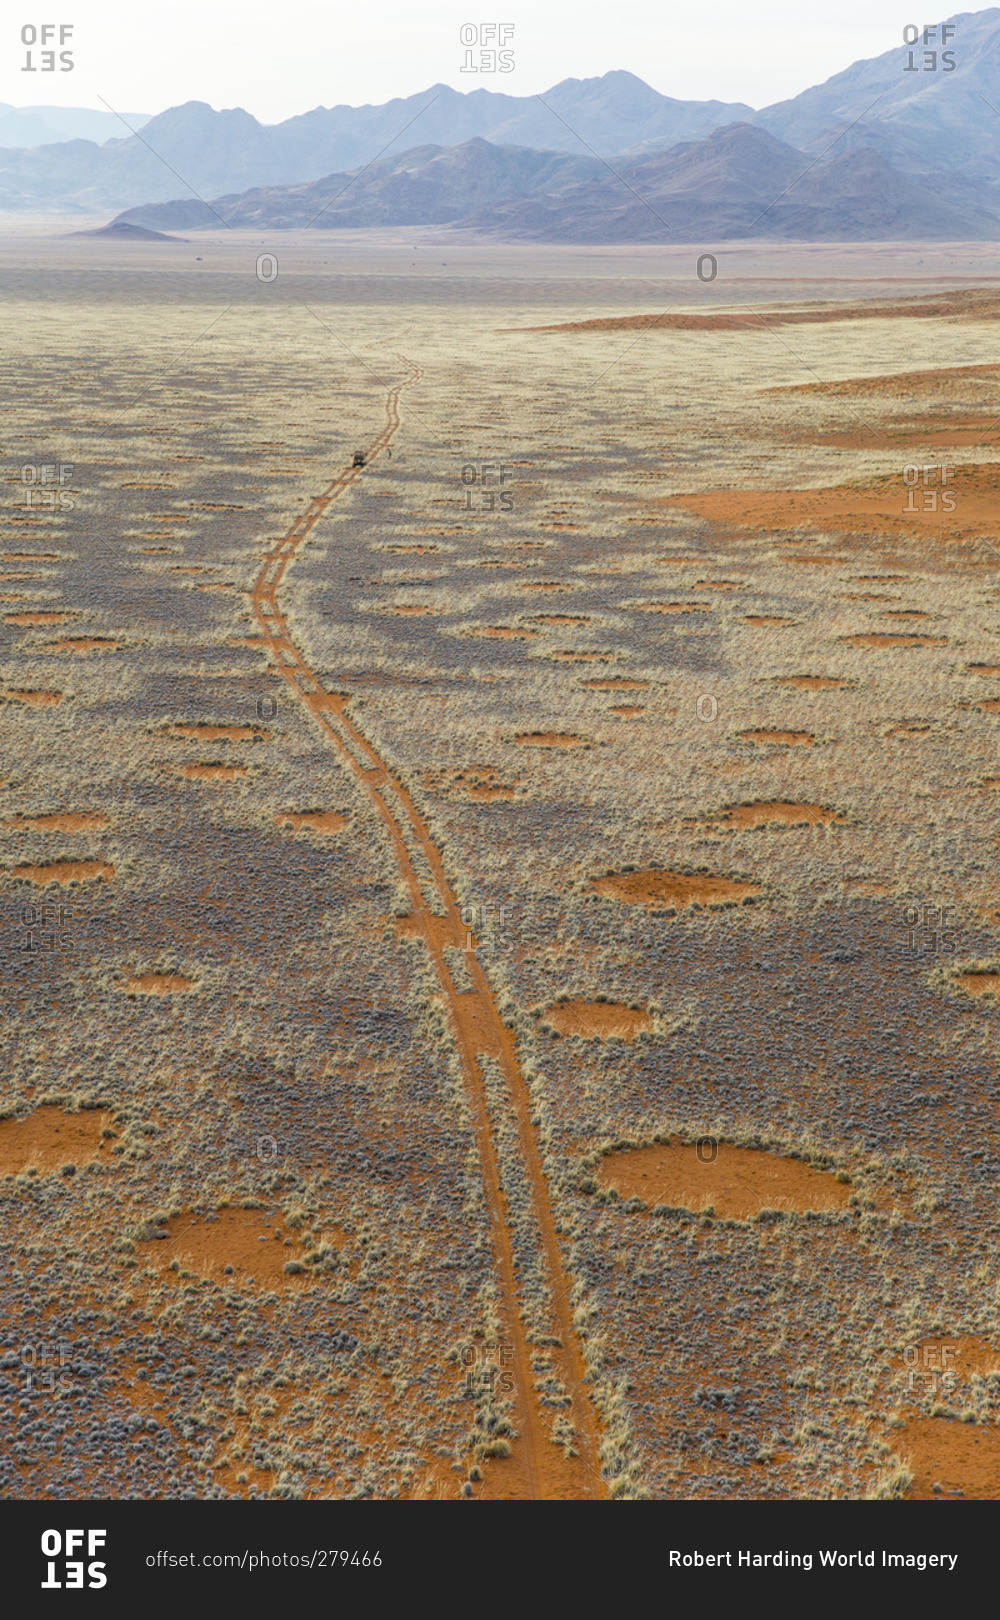 Land Rover on deserted track in the Namib Desert, Namibia, Africa